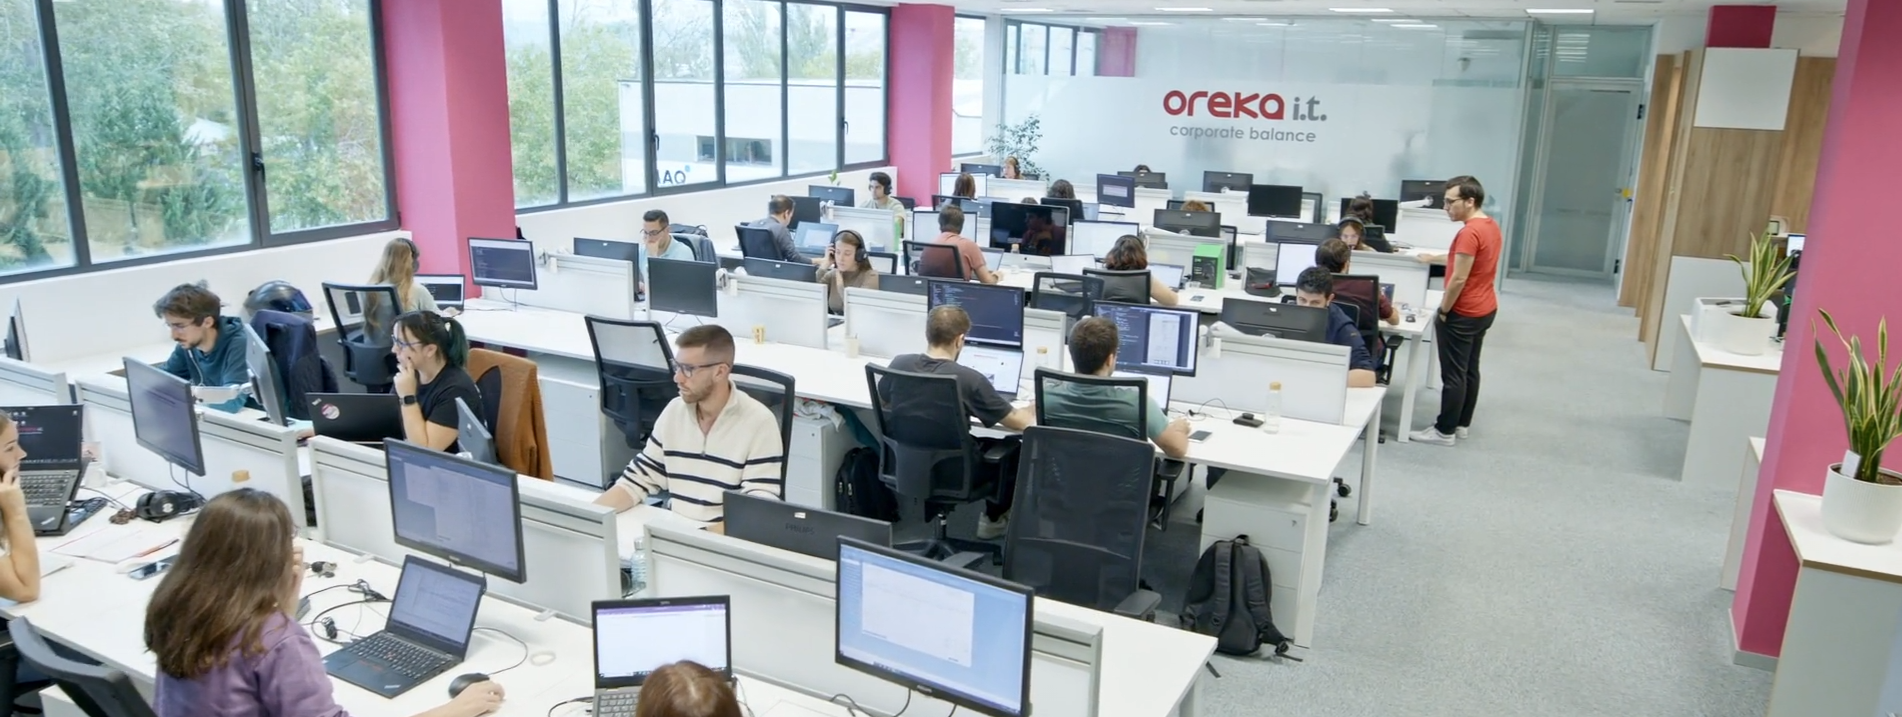 Intarex s'integra a Oreka IT